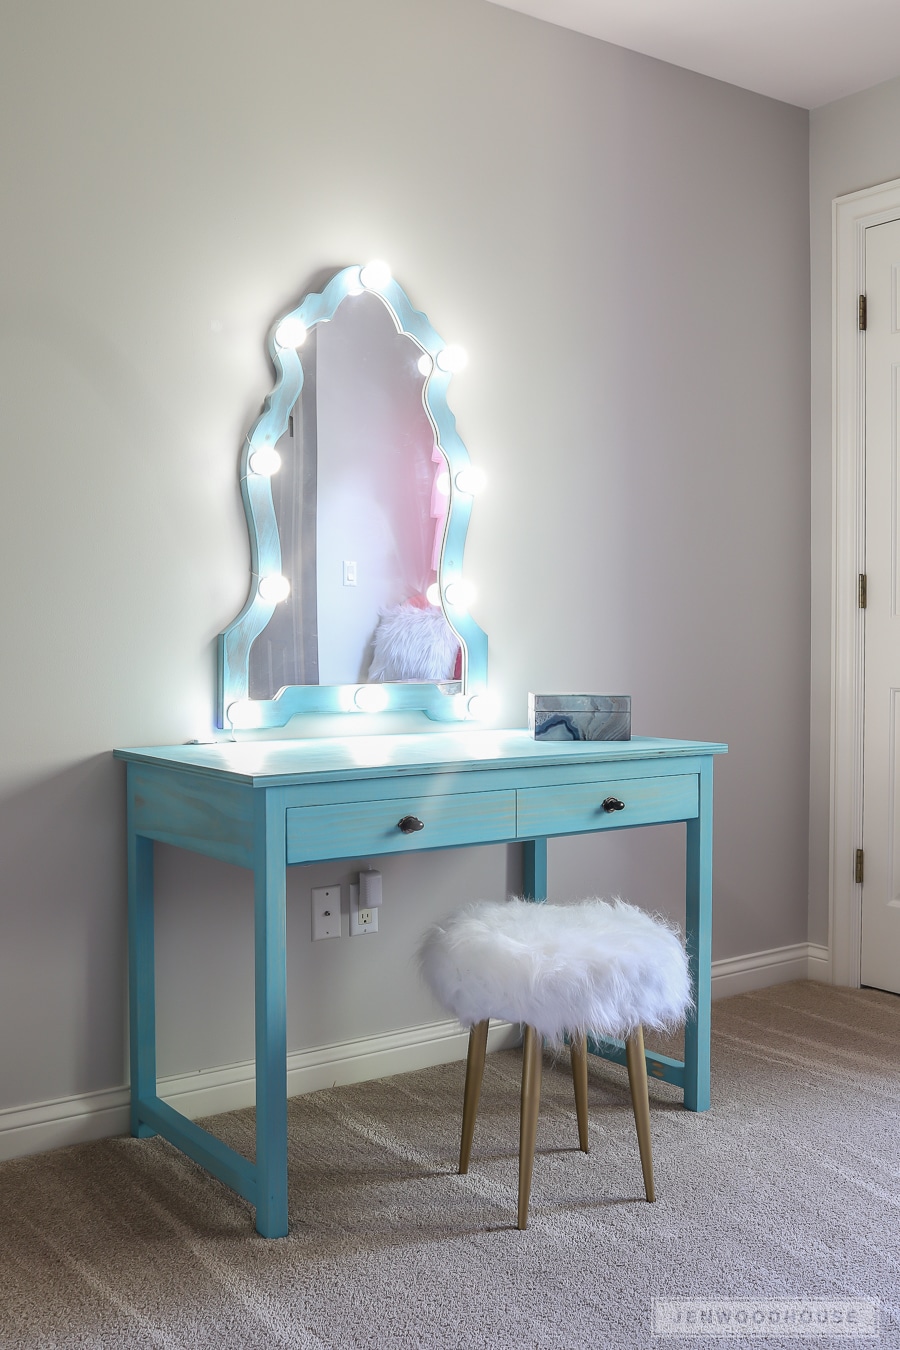 How To Build A Diy Makeup Vanity With Lights Desk Drawers - Diy Simple Makeup Vanity